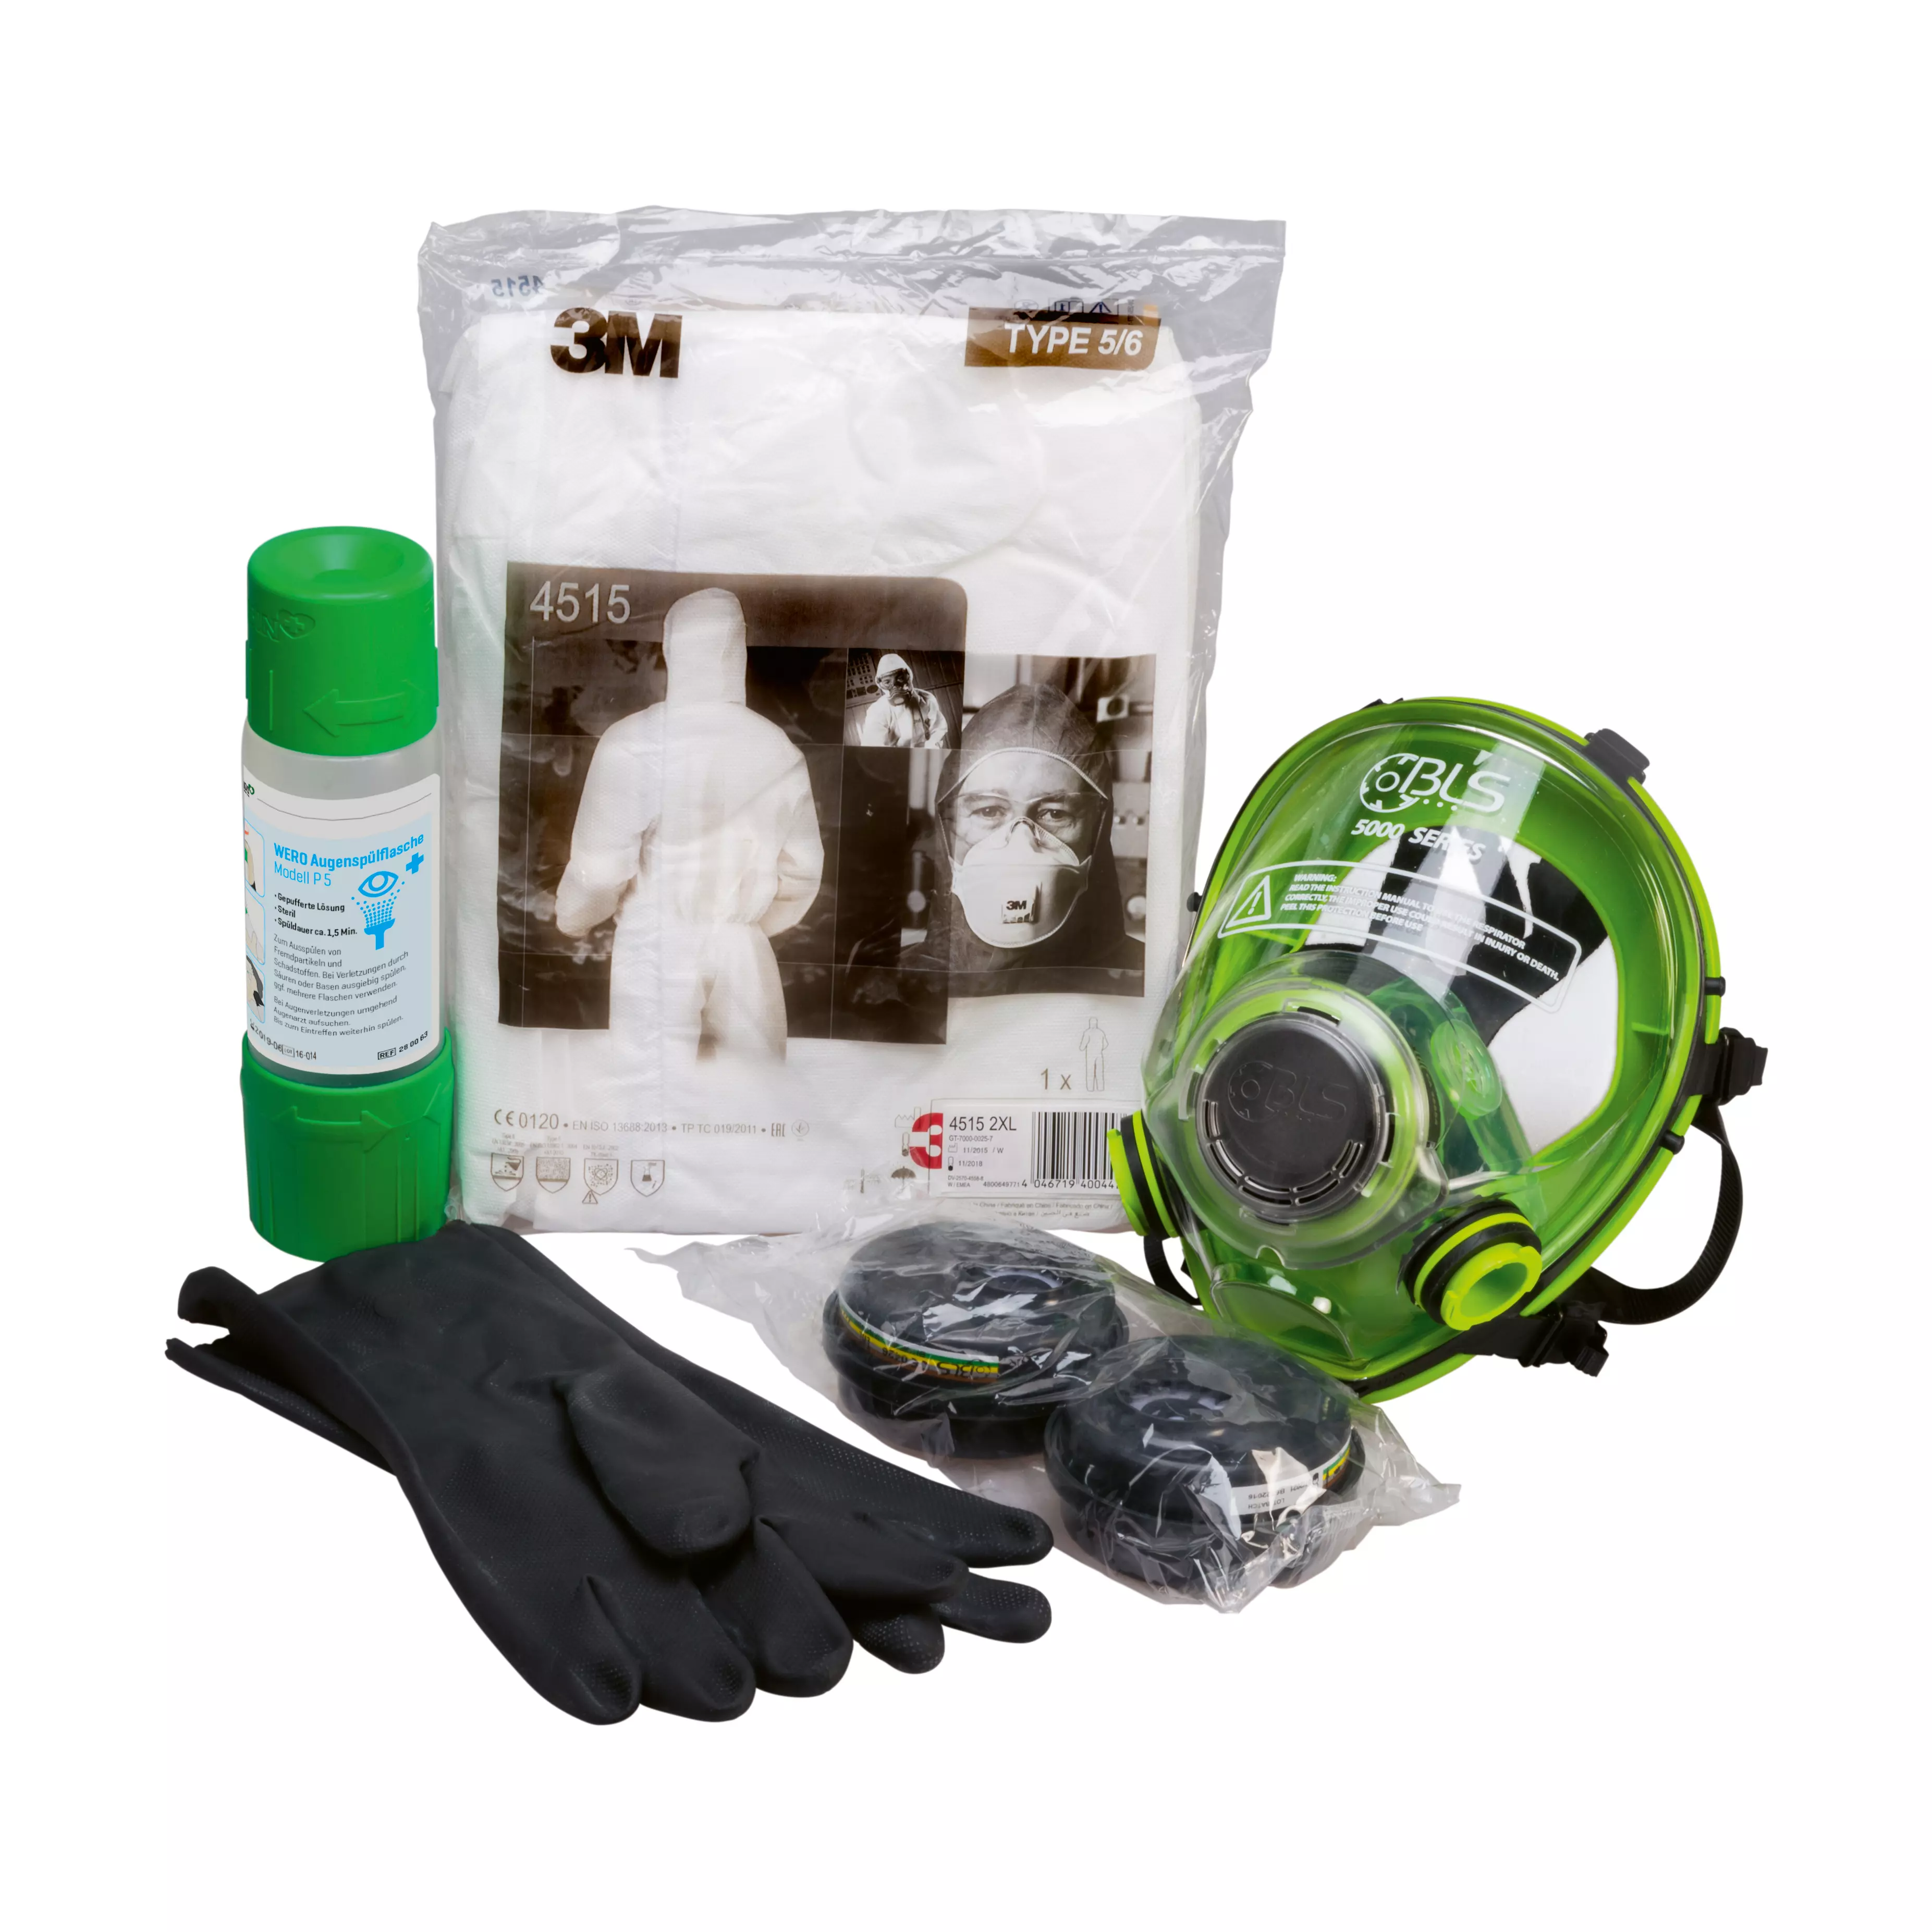 Hazardous goods case with full face mask